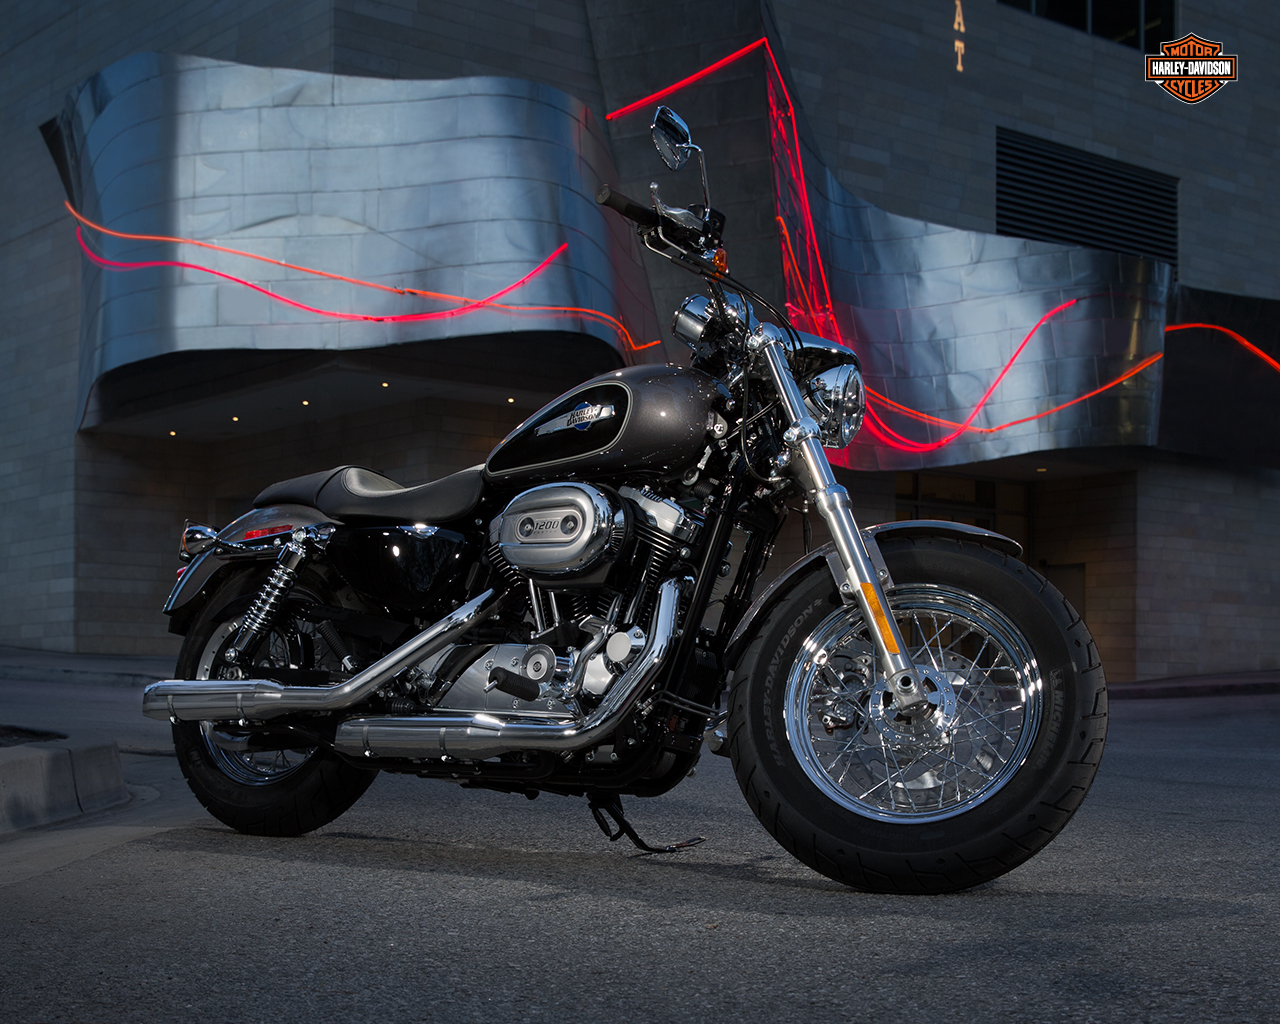 2014 Harley Davidson Sportster 1200 Custom Pictures Galore Autoevolution